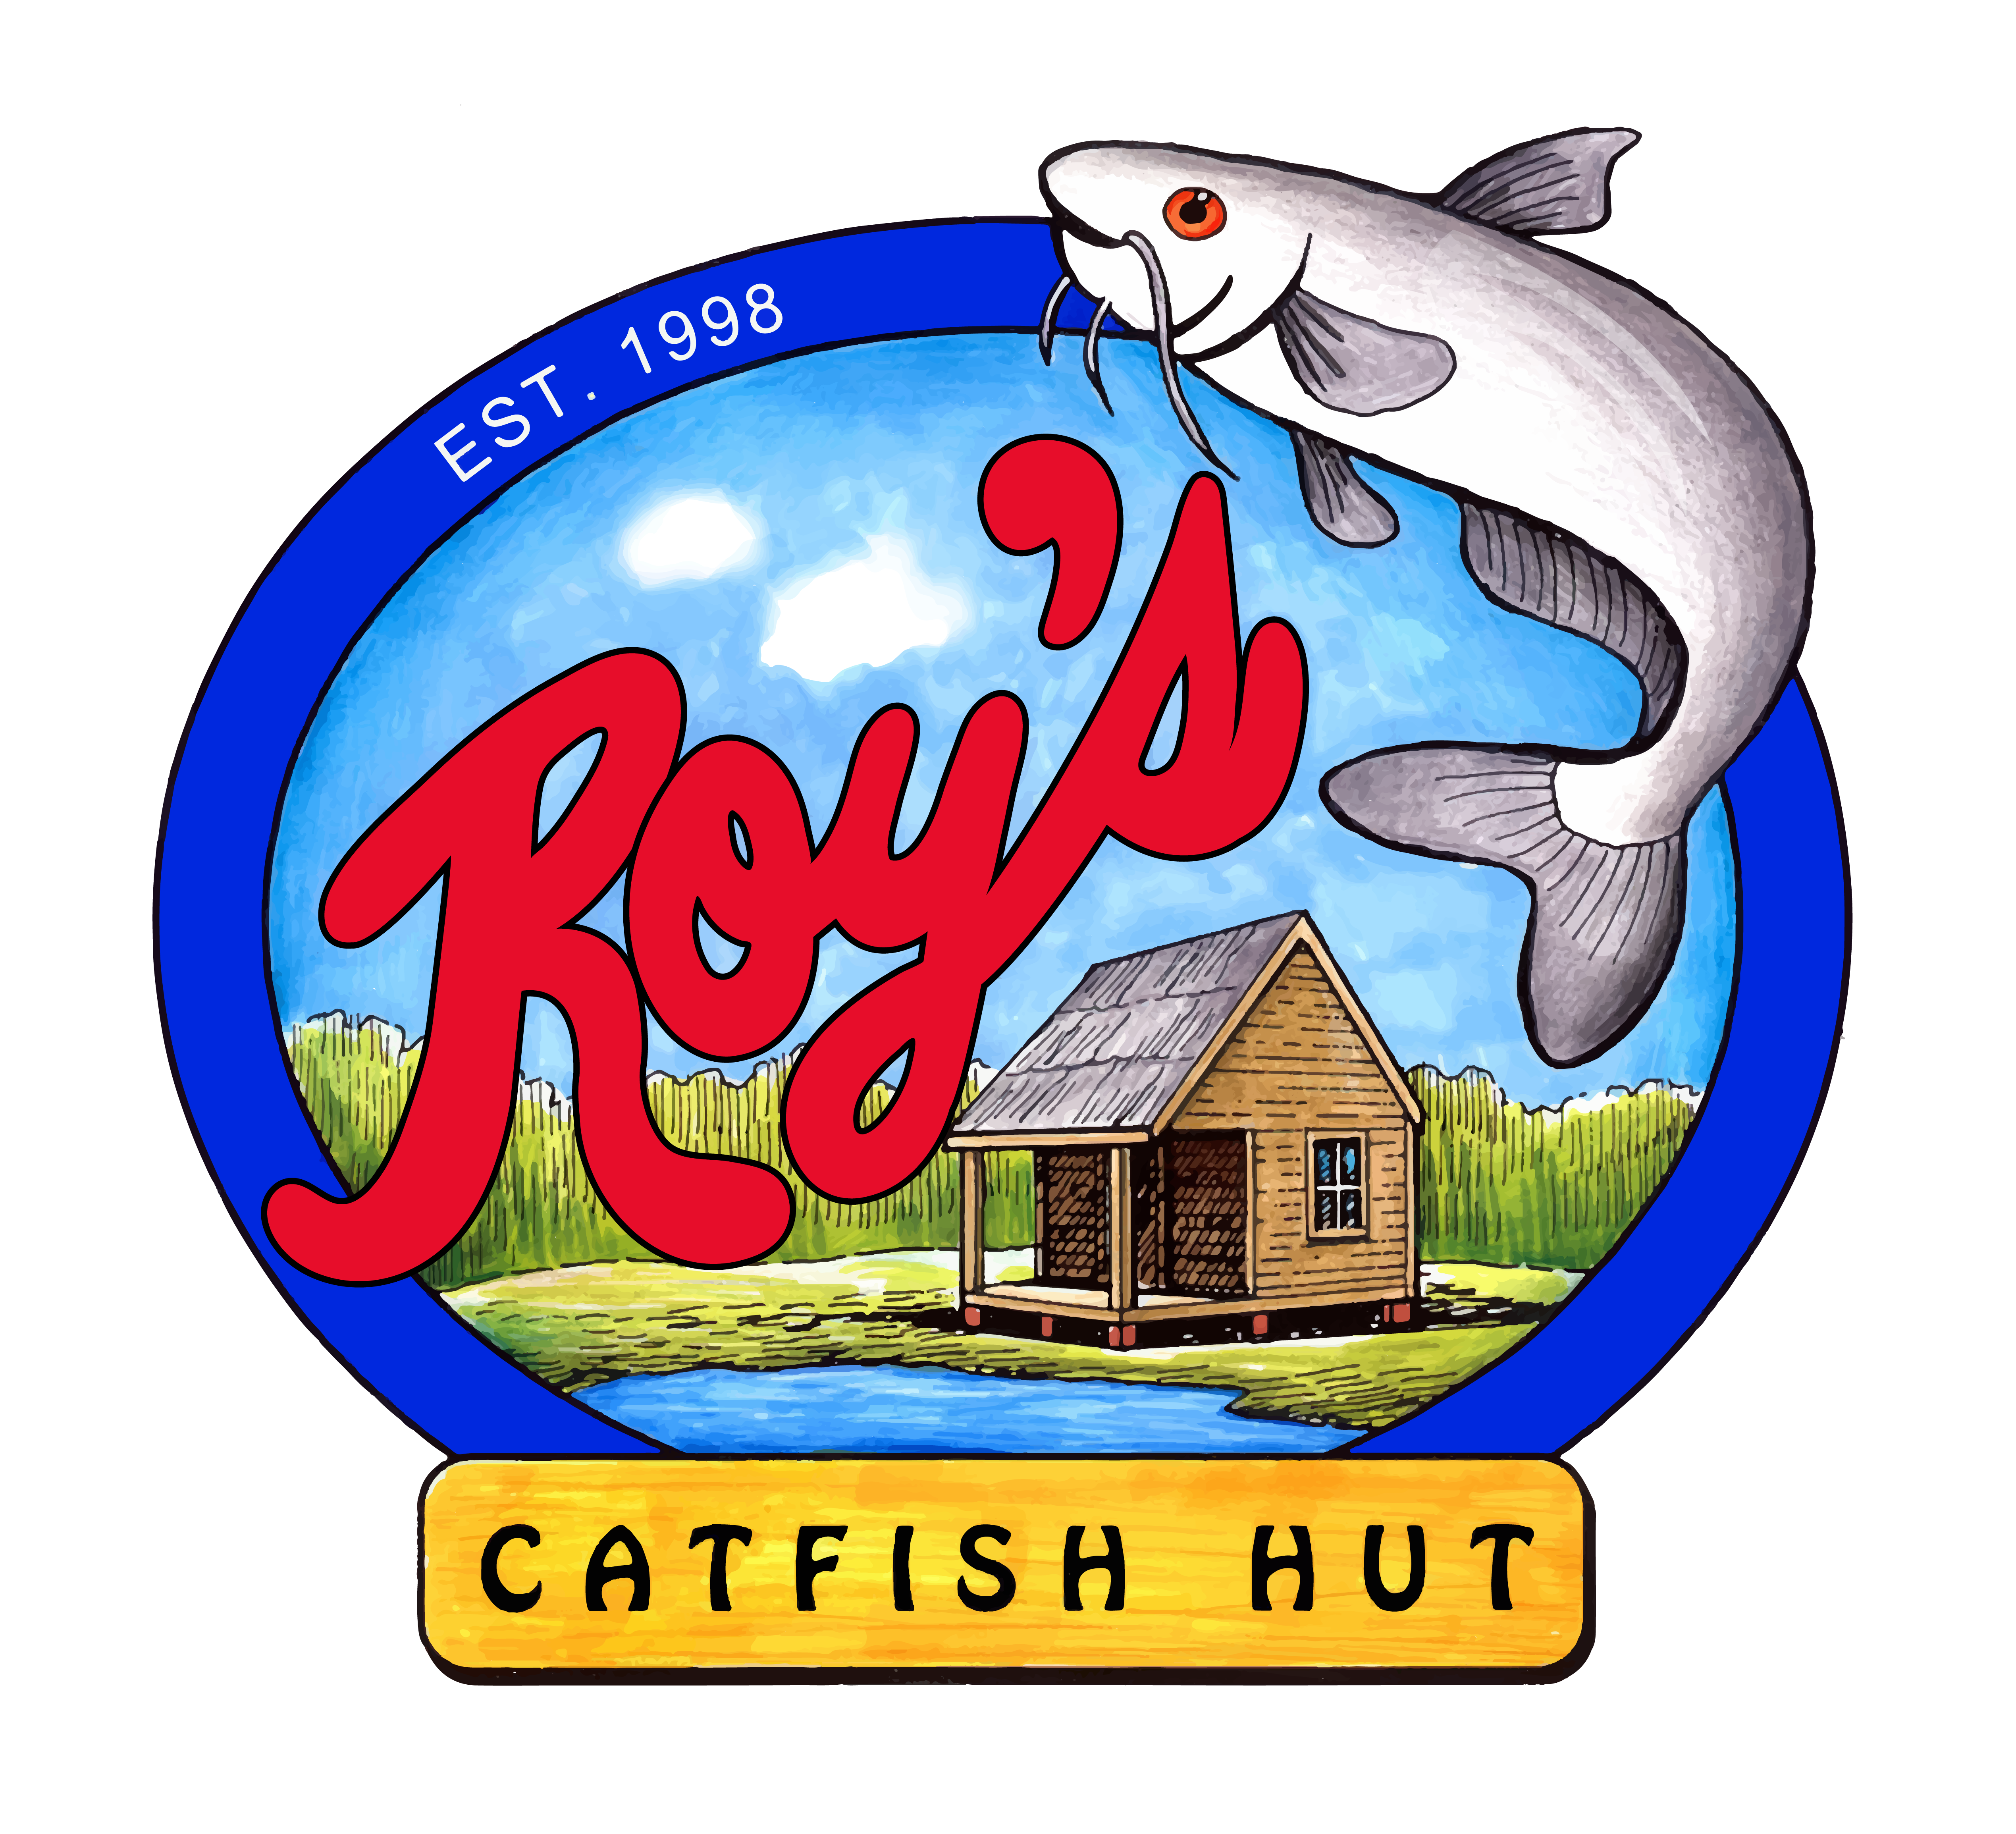 Roy Catfish Hut | The Best Seafood Around